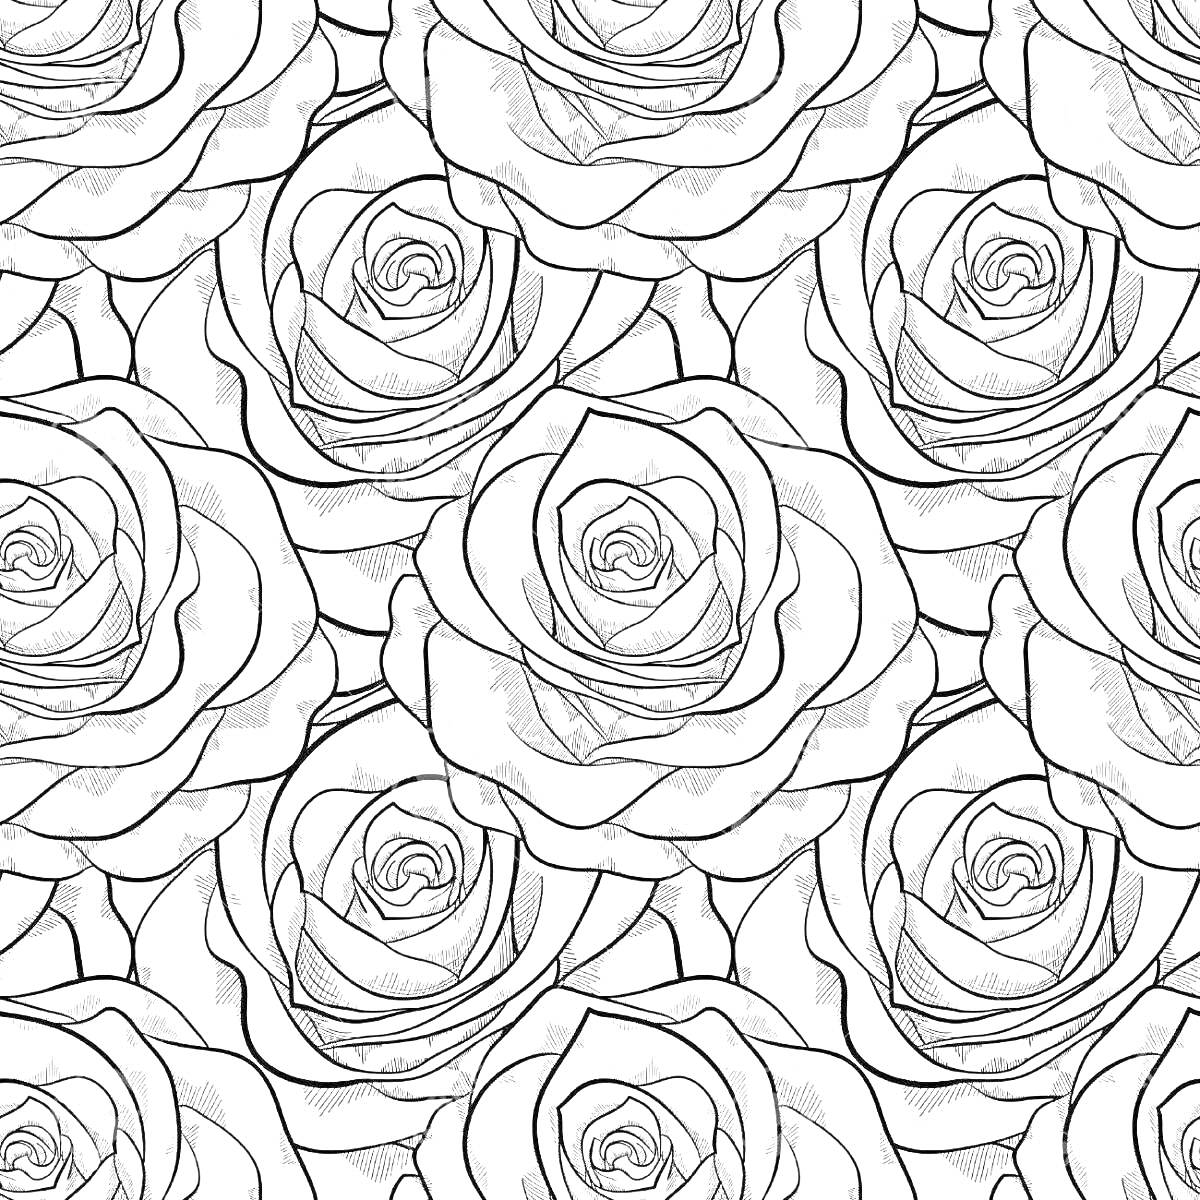 Раскраска Роза, узор из множества роз на черном фоне